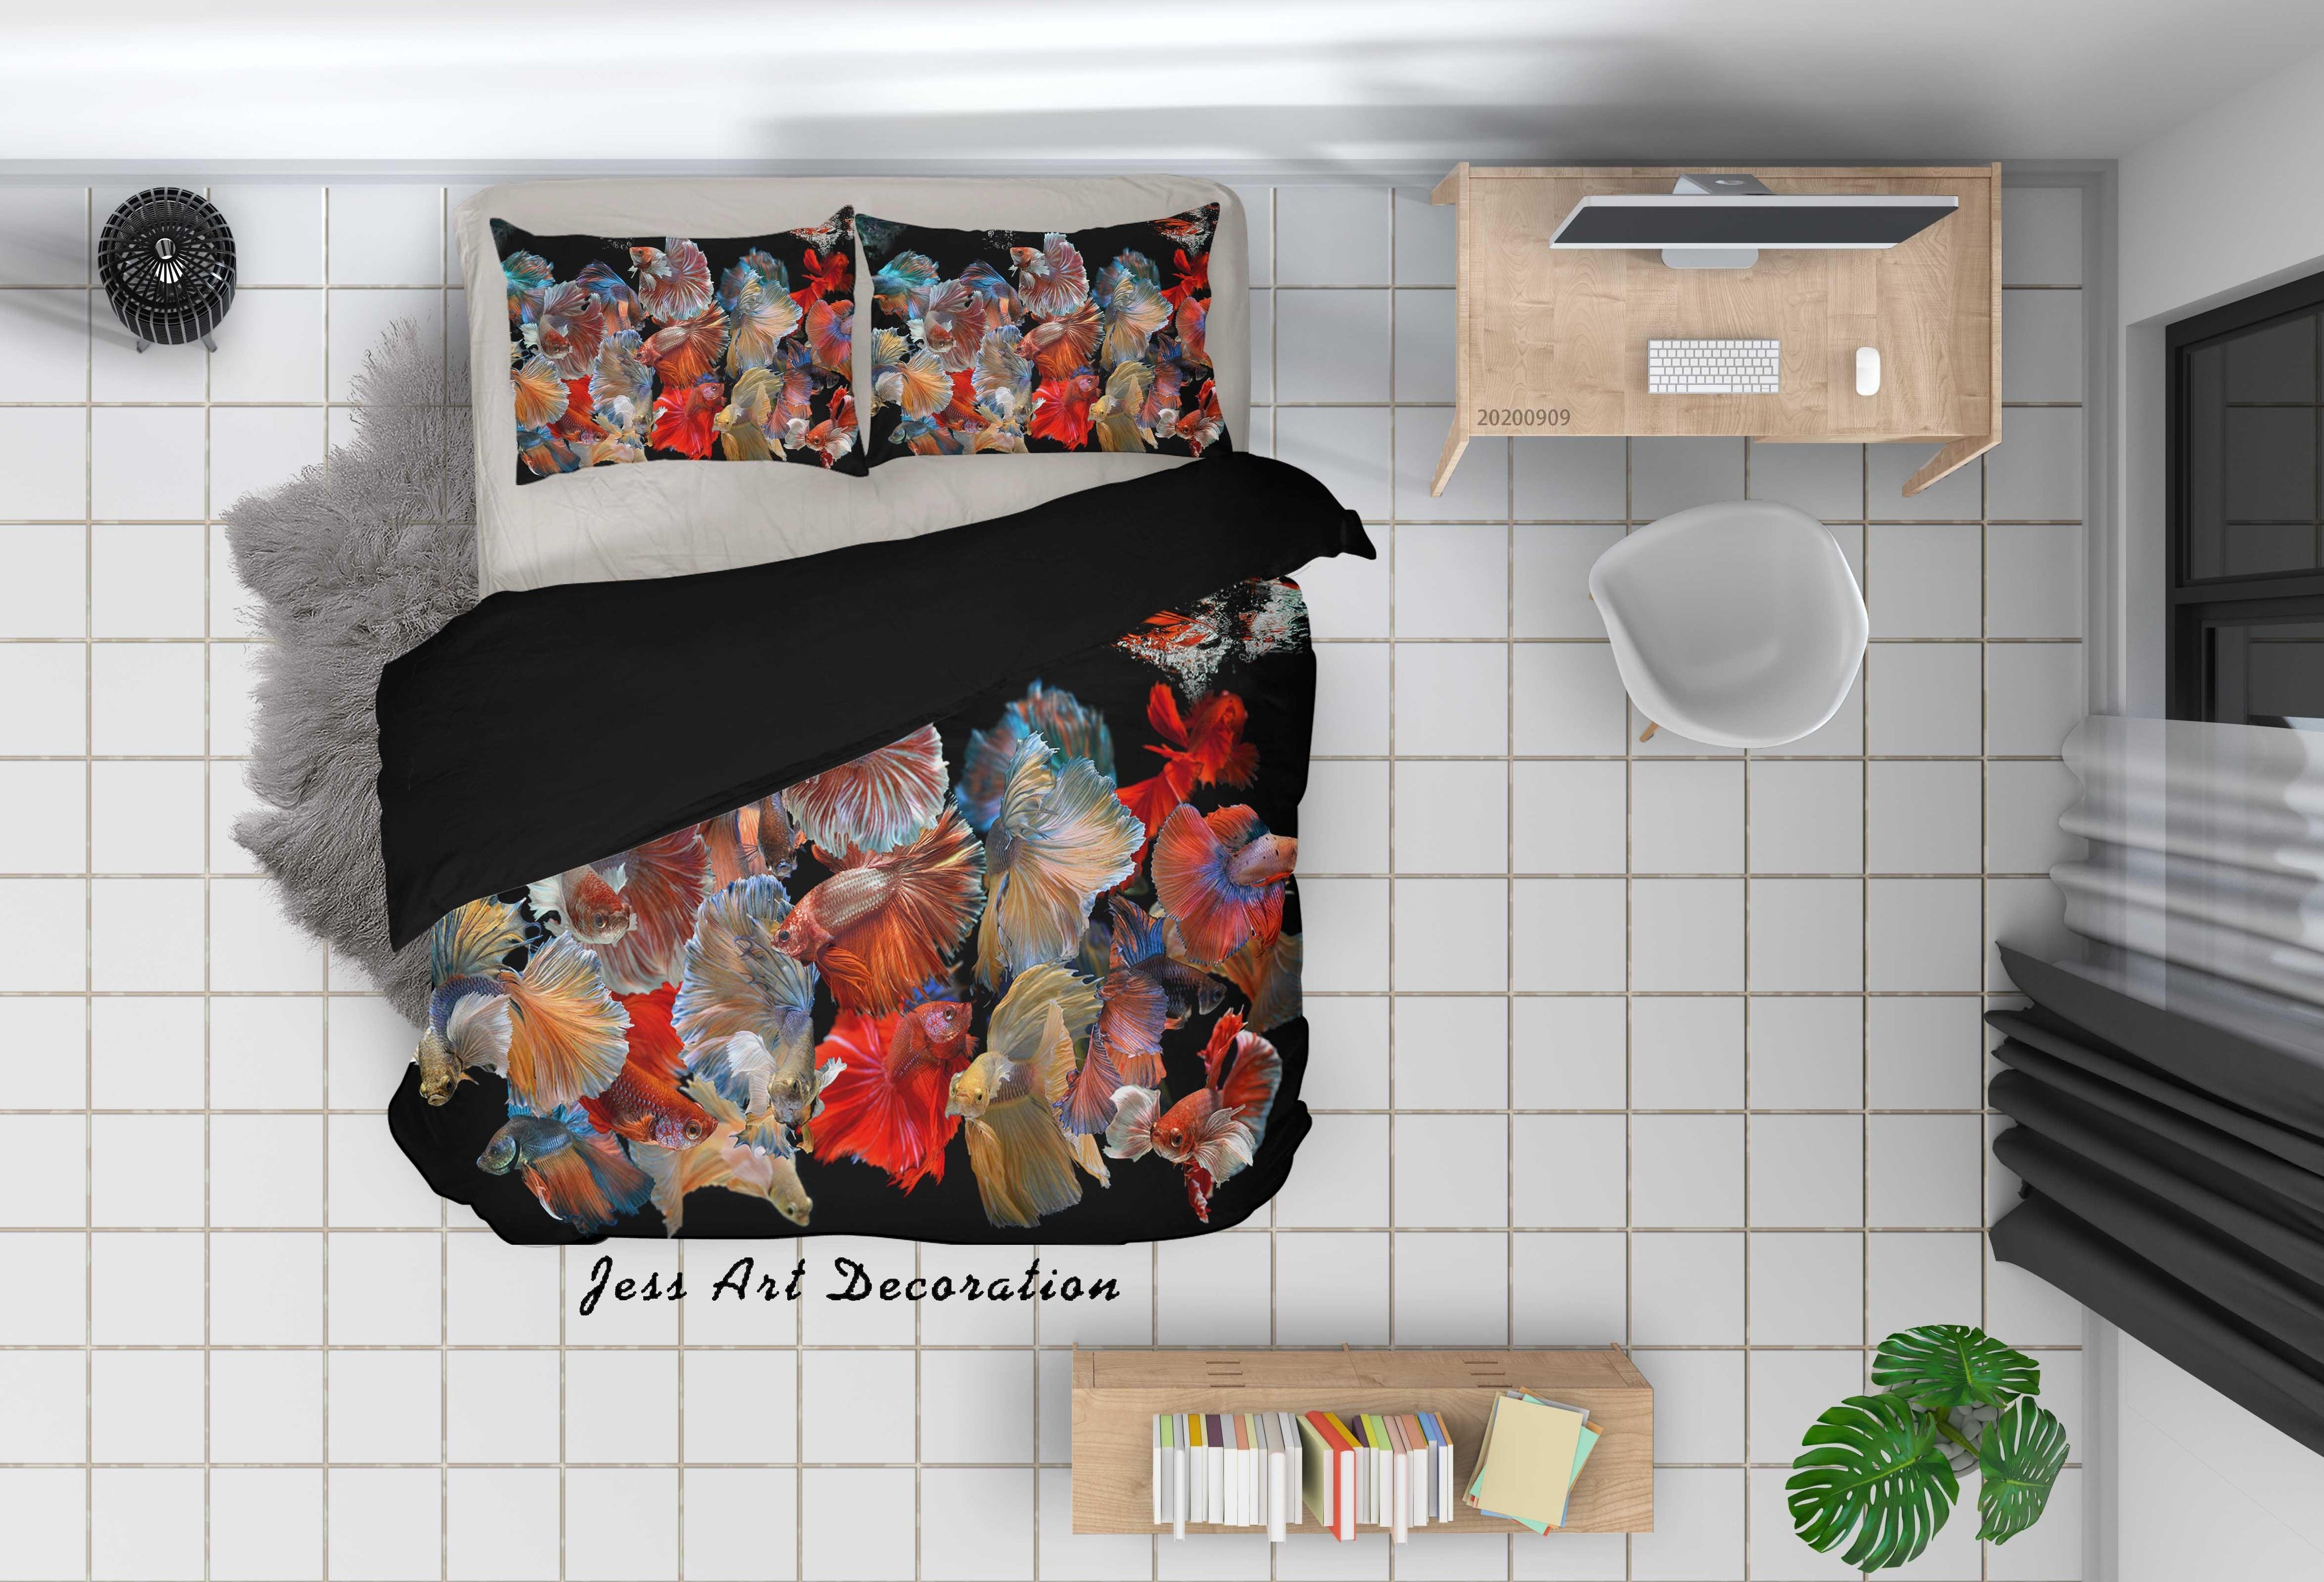 3D Watercolour Pattern Colourful Butterfly Quilt Cover Set Bedding Set Duvet Cover Pillowcases WJ 6001- Jess Art Decoration